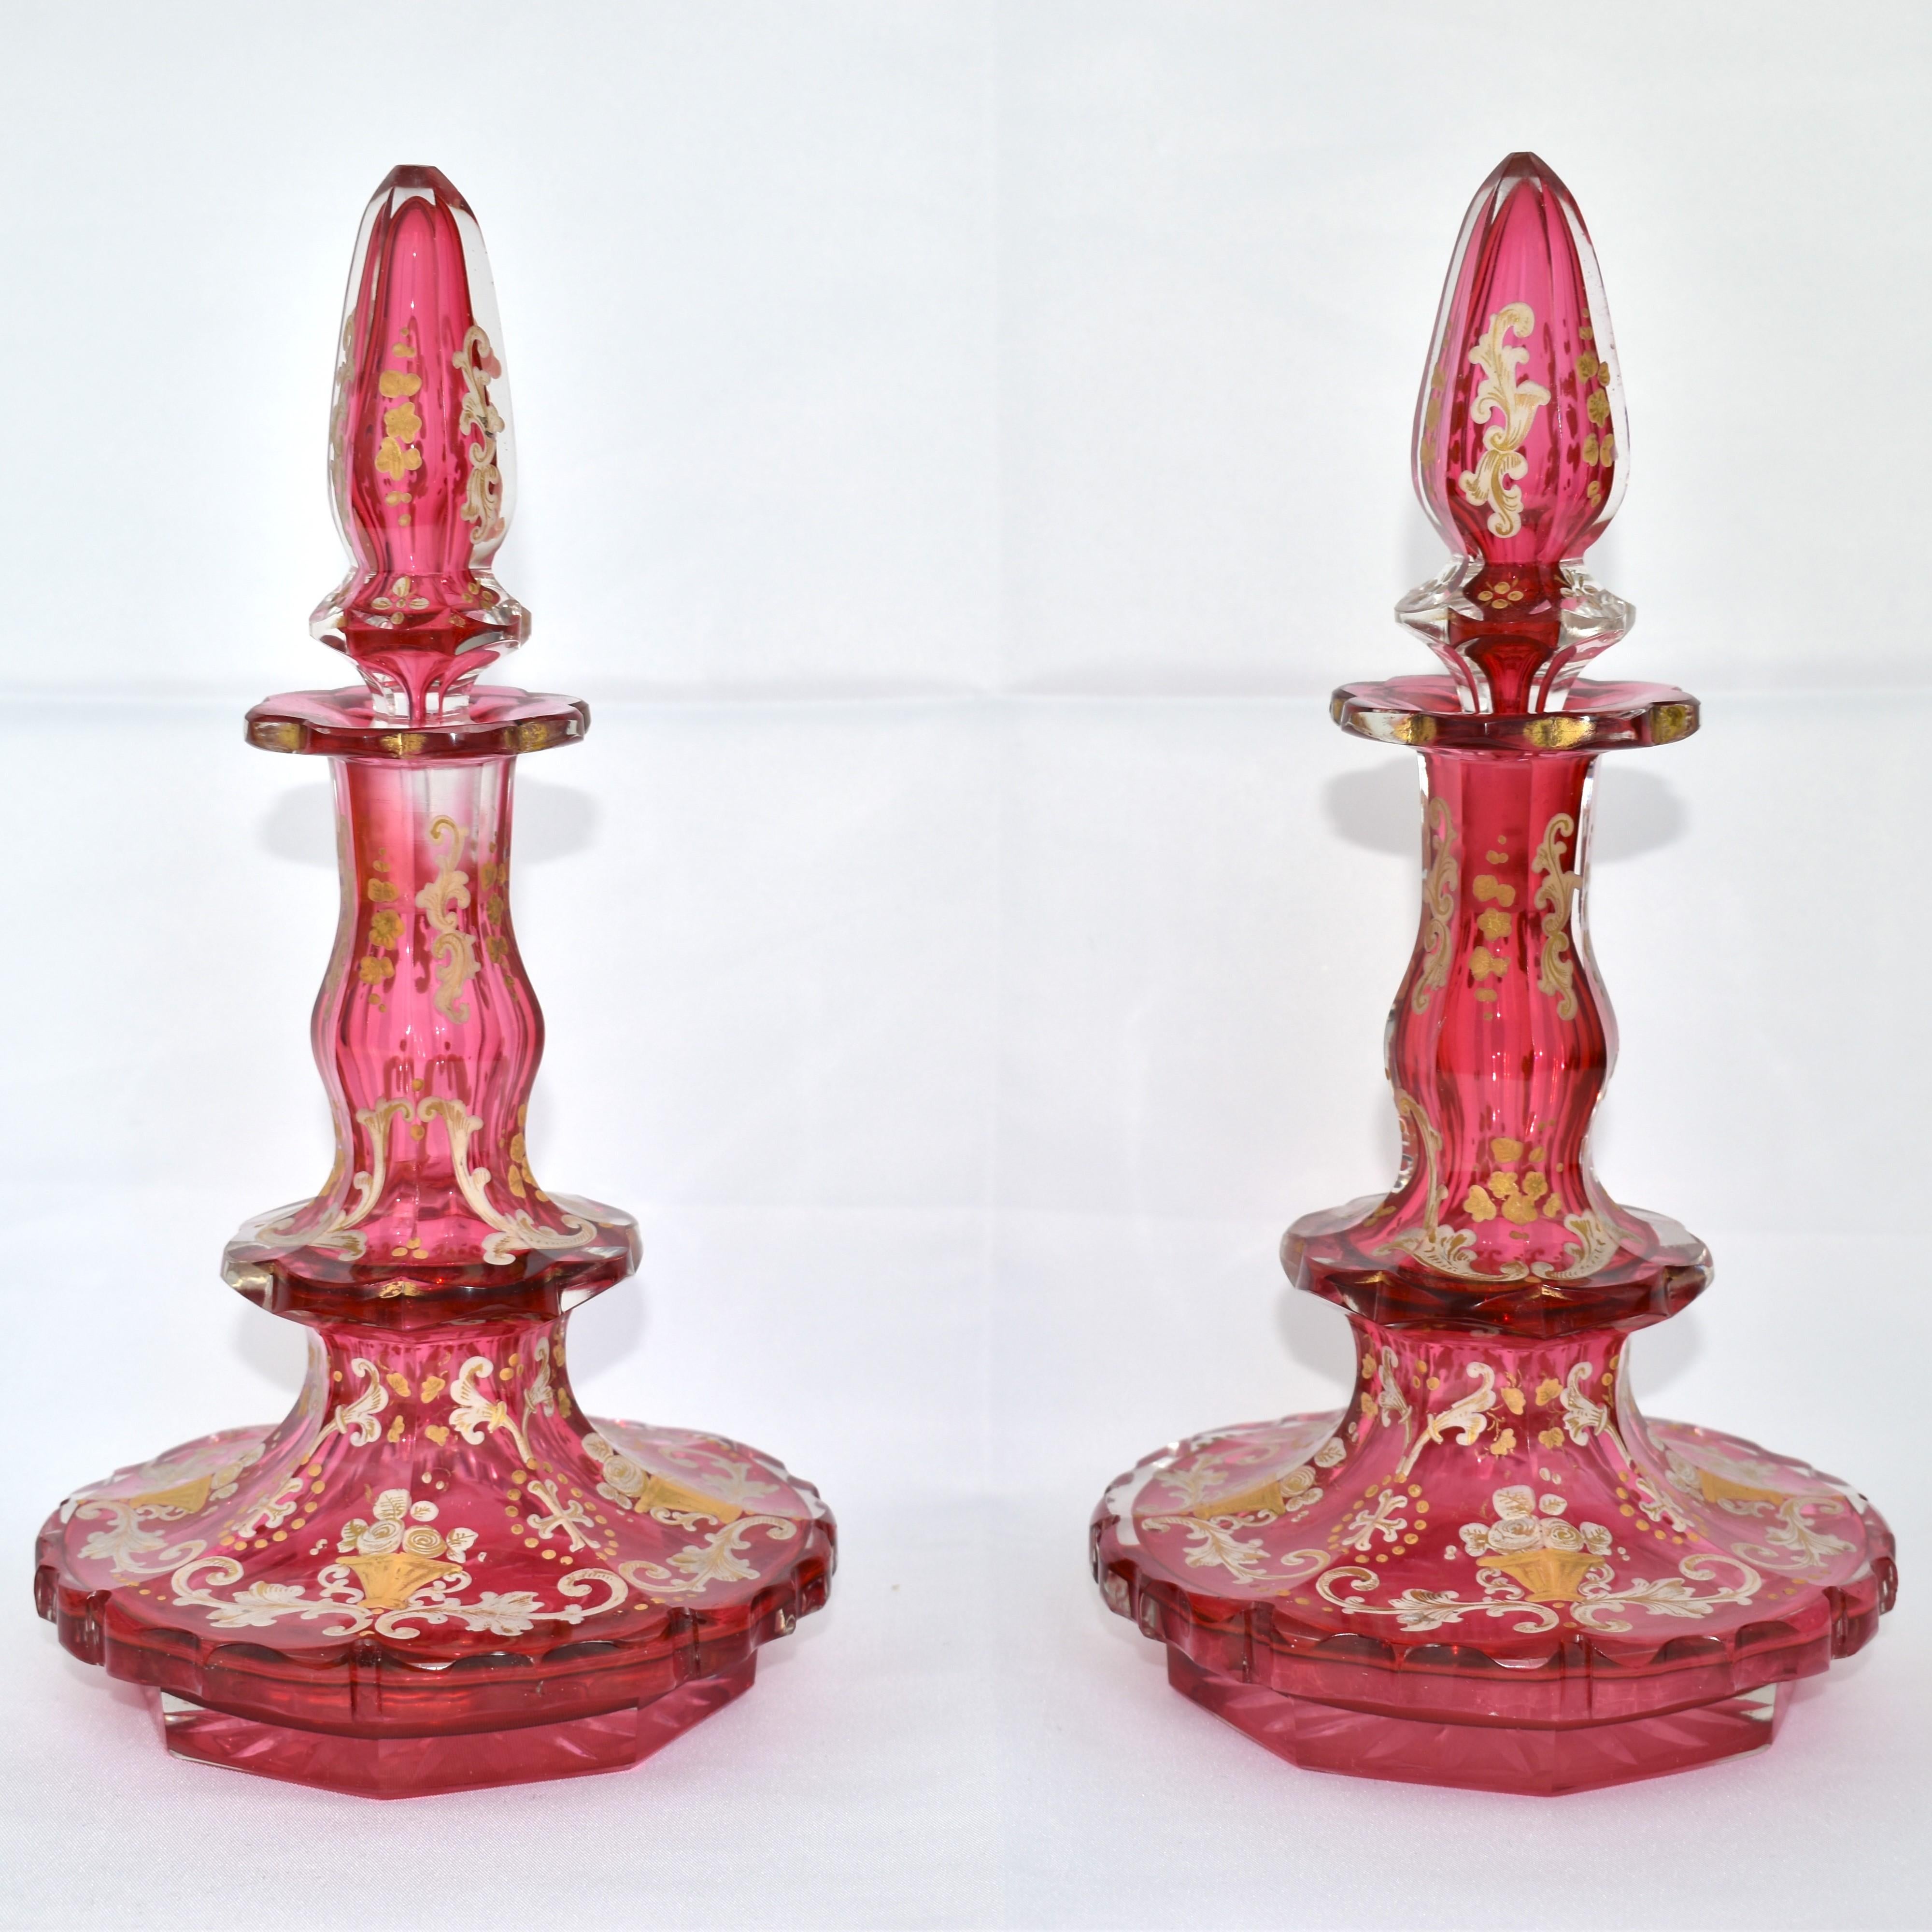 Gilt ANTIQUE PAIR OF BOHEMIAN CRANBERRY GLASS ENAMELLED PERFUME BOTTLES, 19th CENTURY For Sale